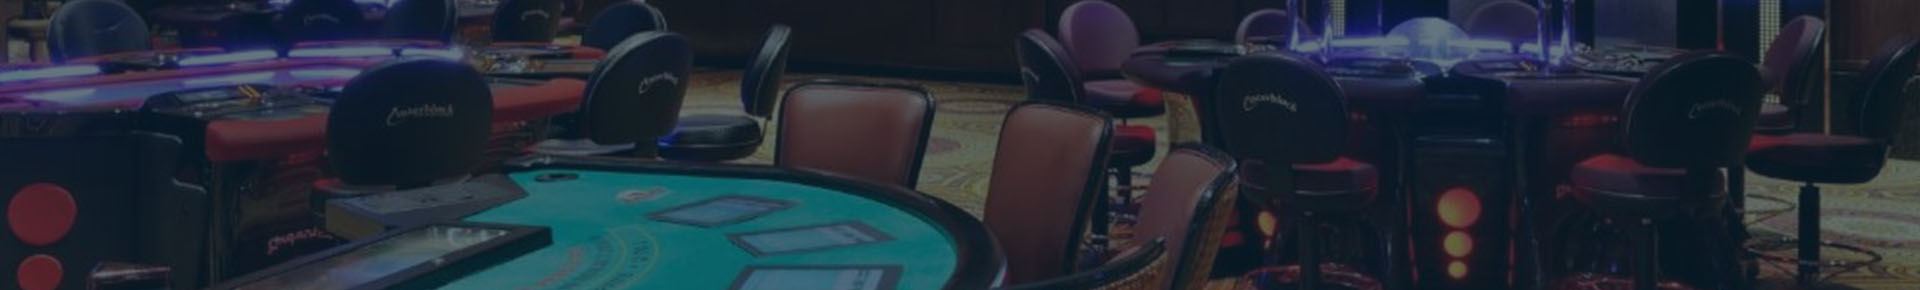 Caesar Windsor Casino